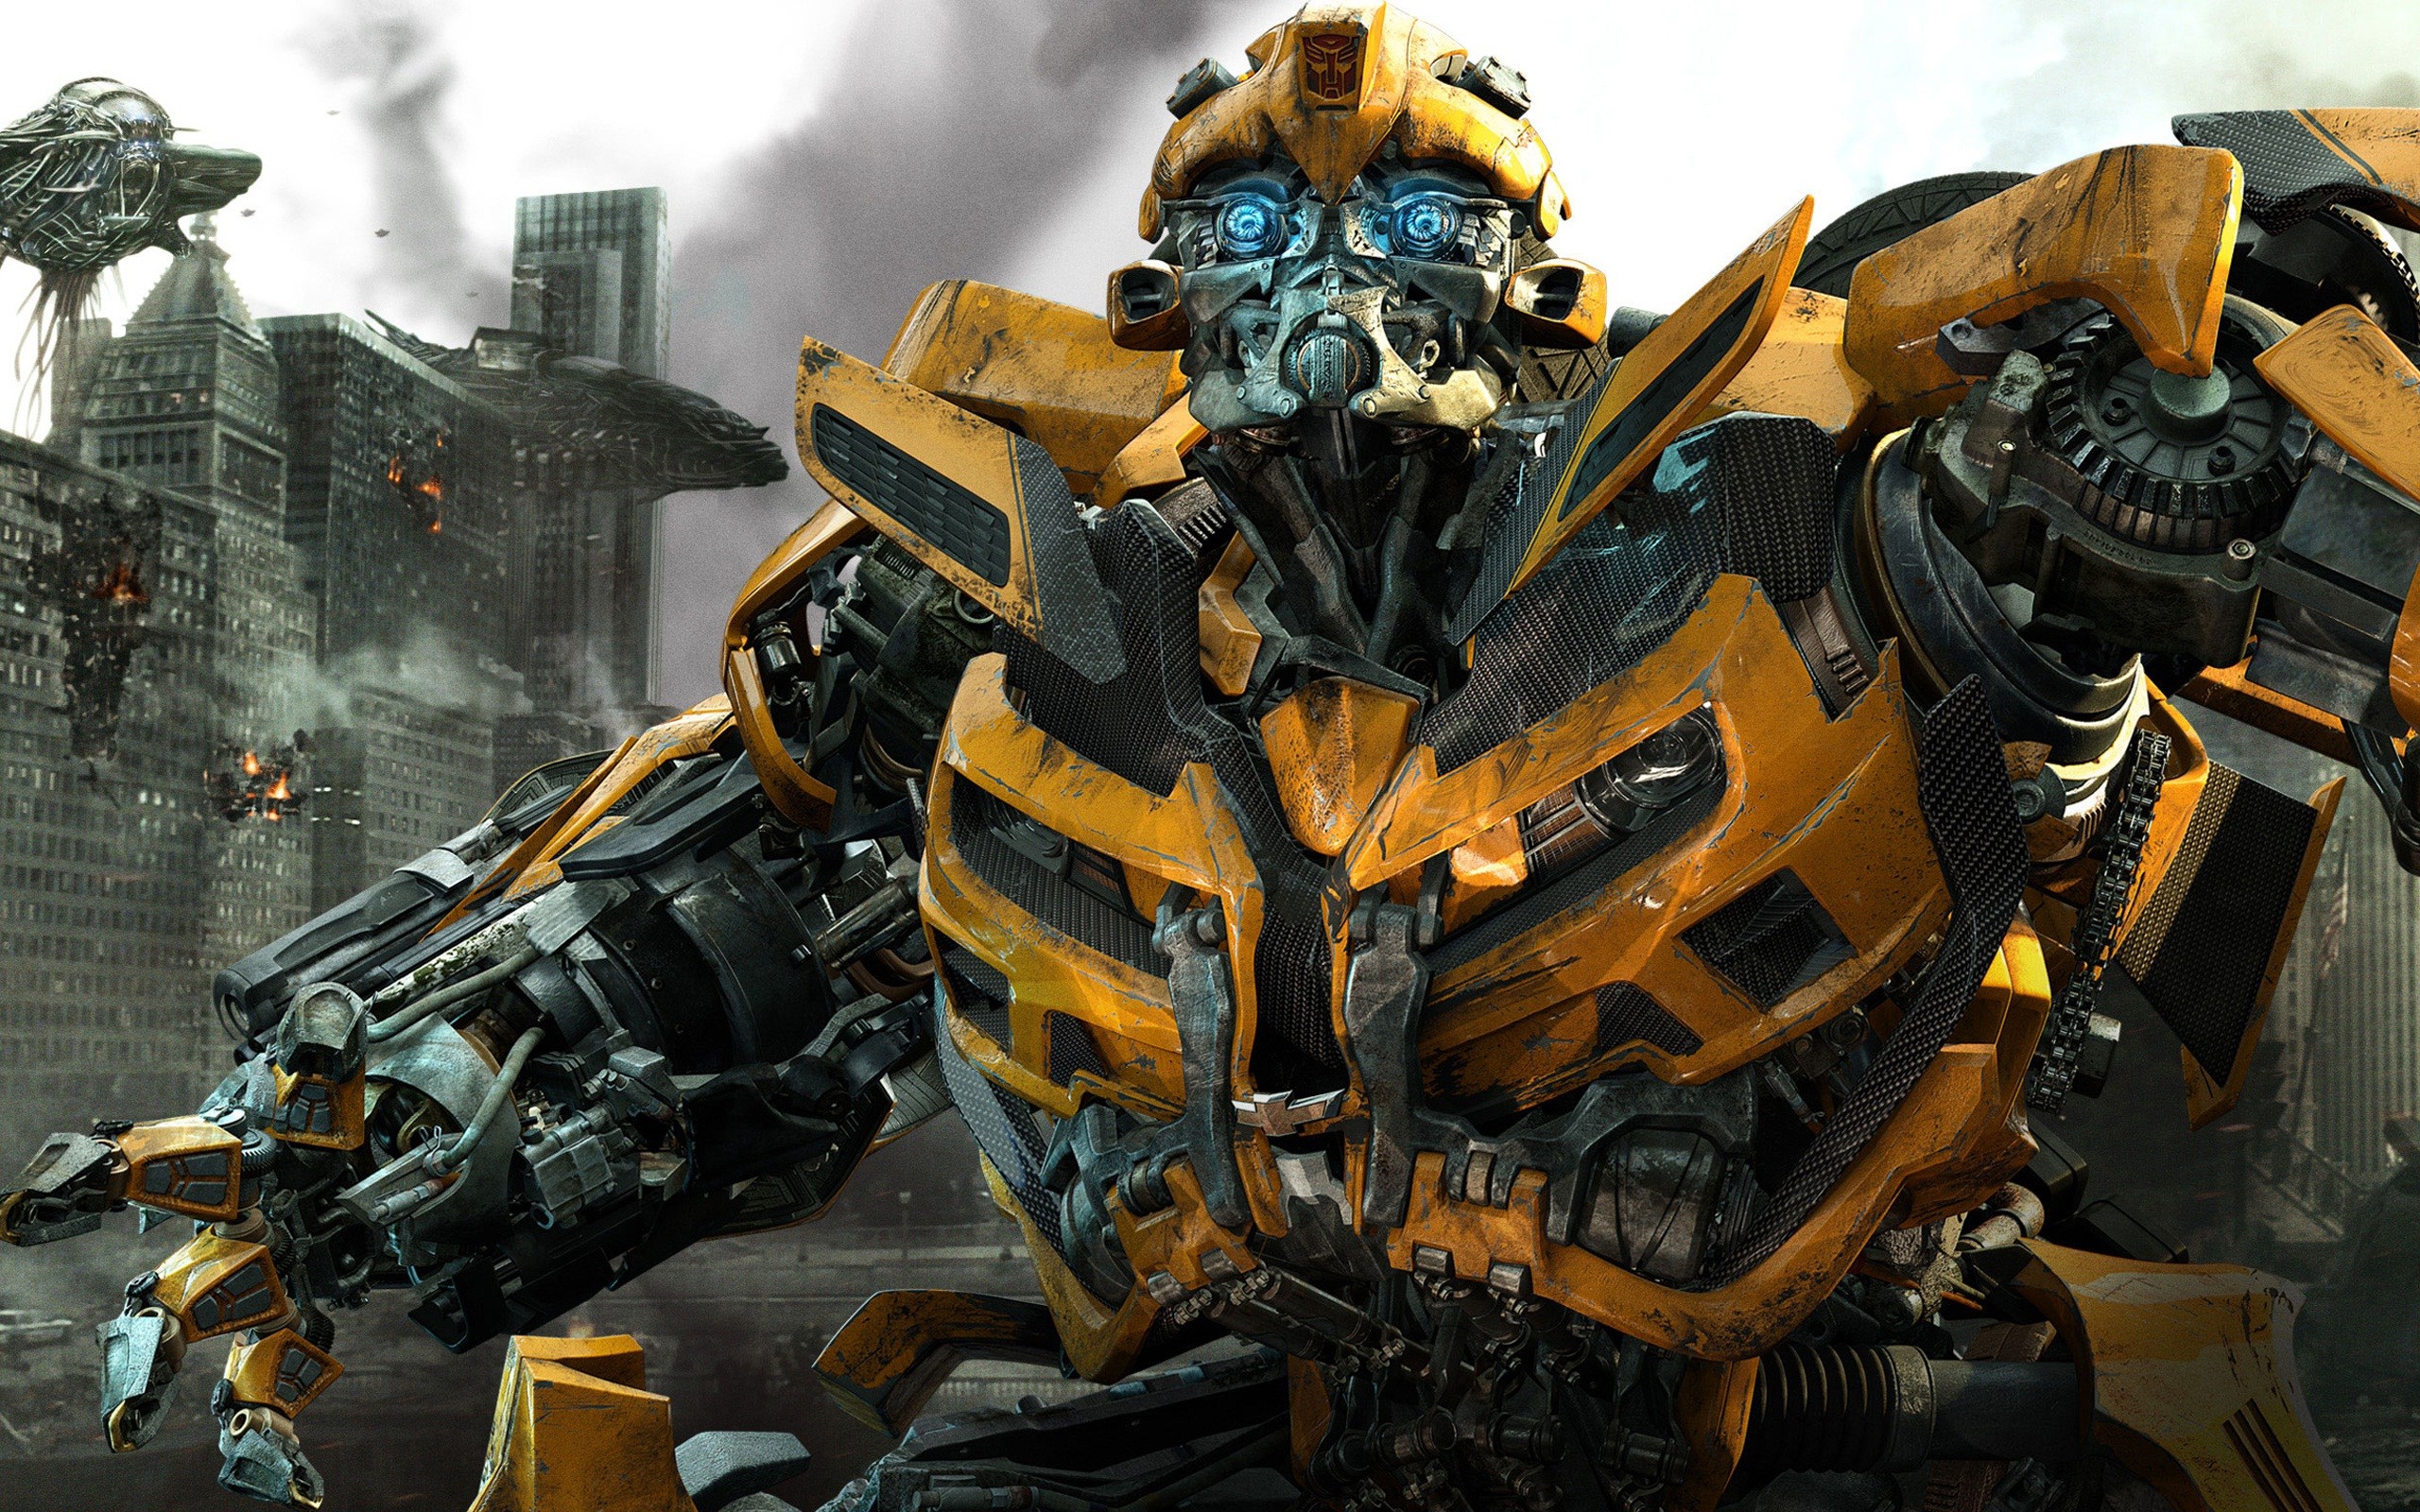 General 2560x1600 Transformers Bumblebee (transformers) movies science fiction robot digital art